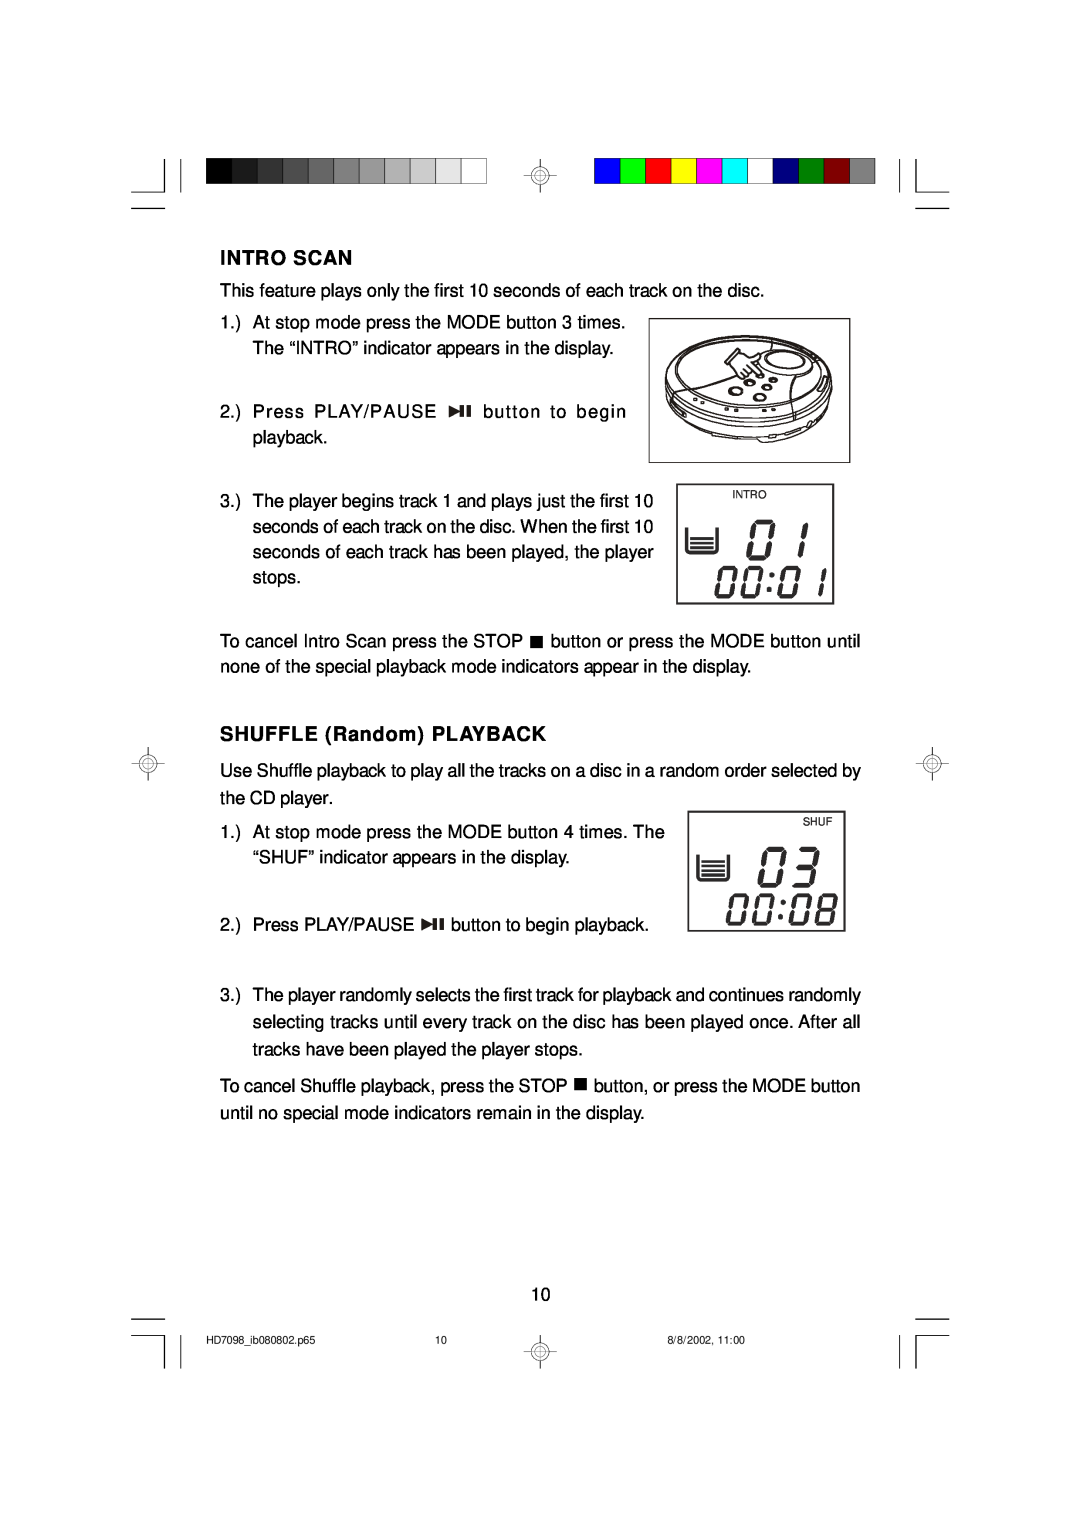 Emerson HD7098 owner manual Intro Scan, SHUFFLE Random PLAYBACK 